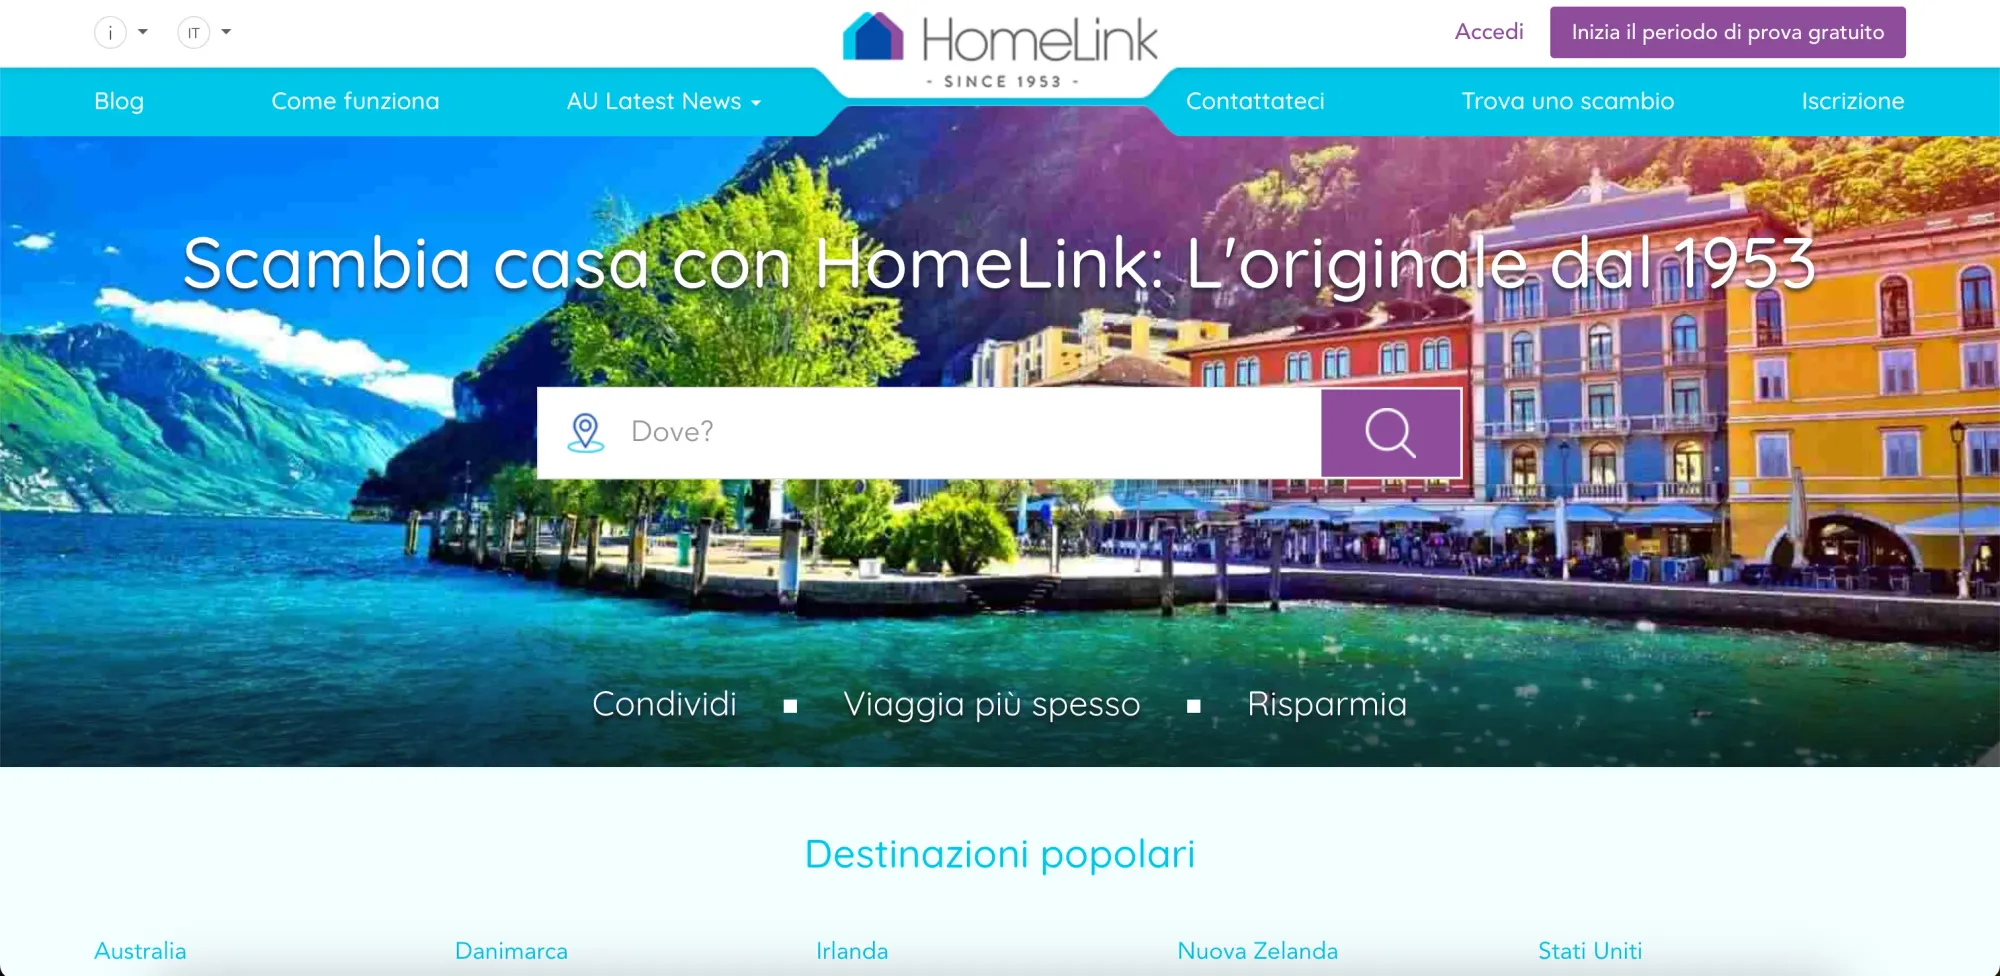 homelink, un sito per scambio case